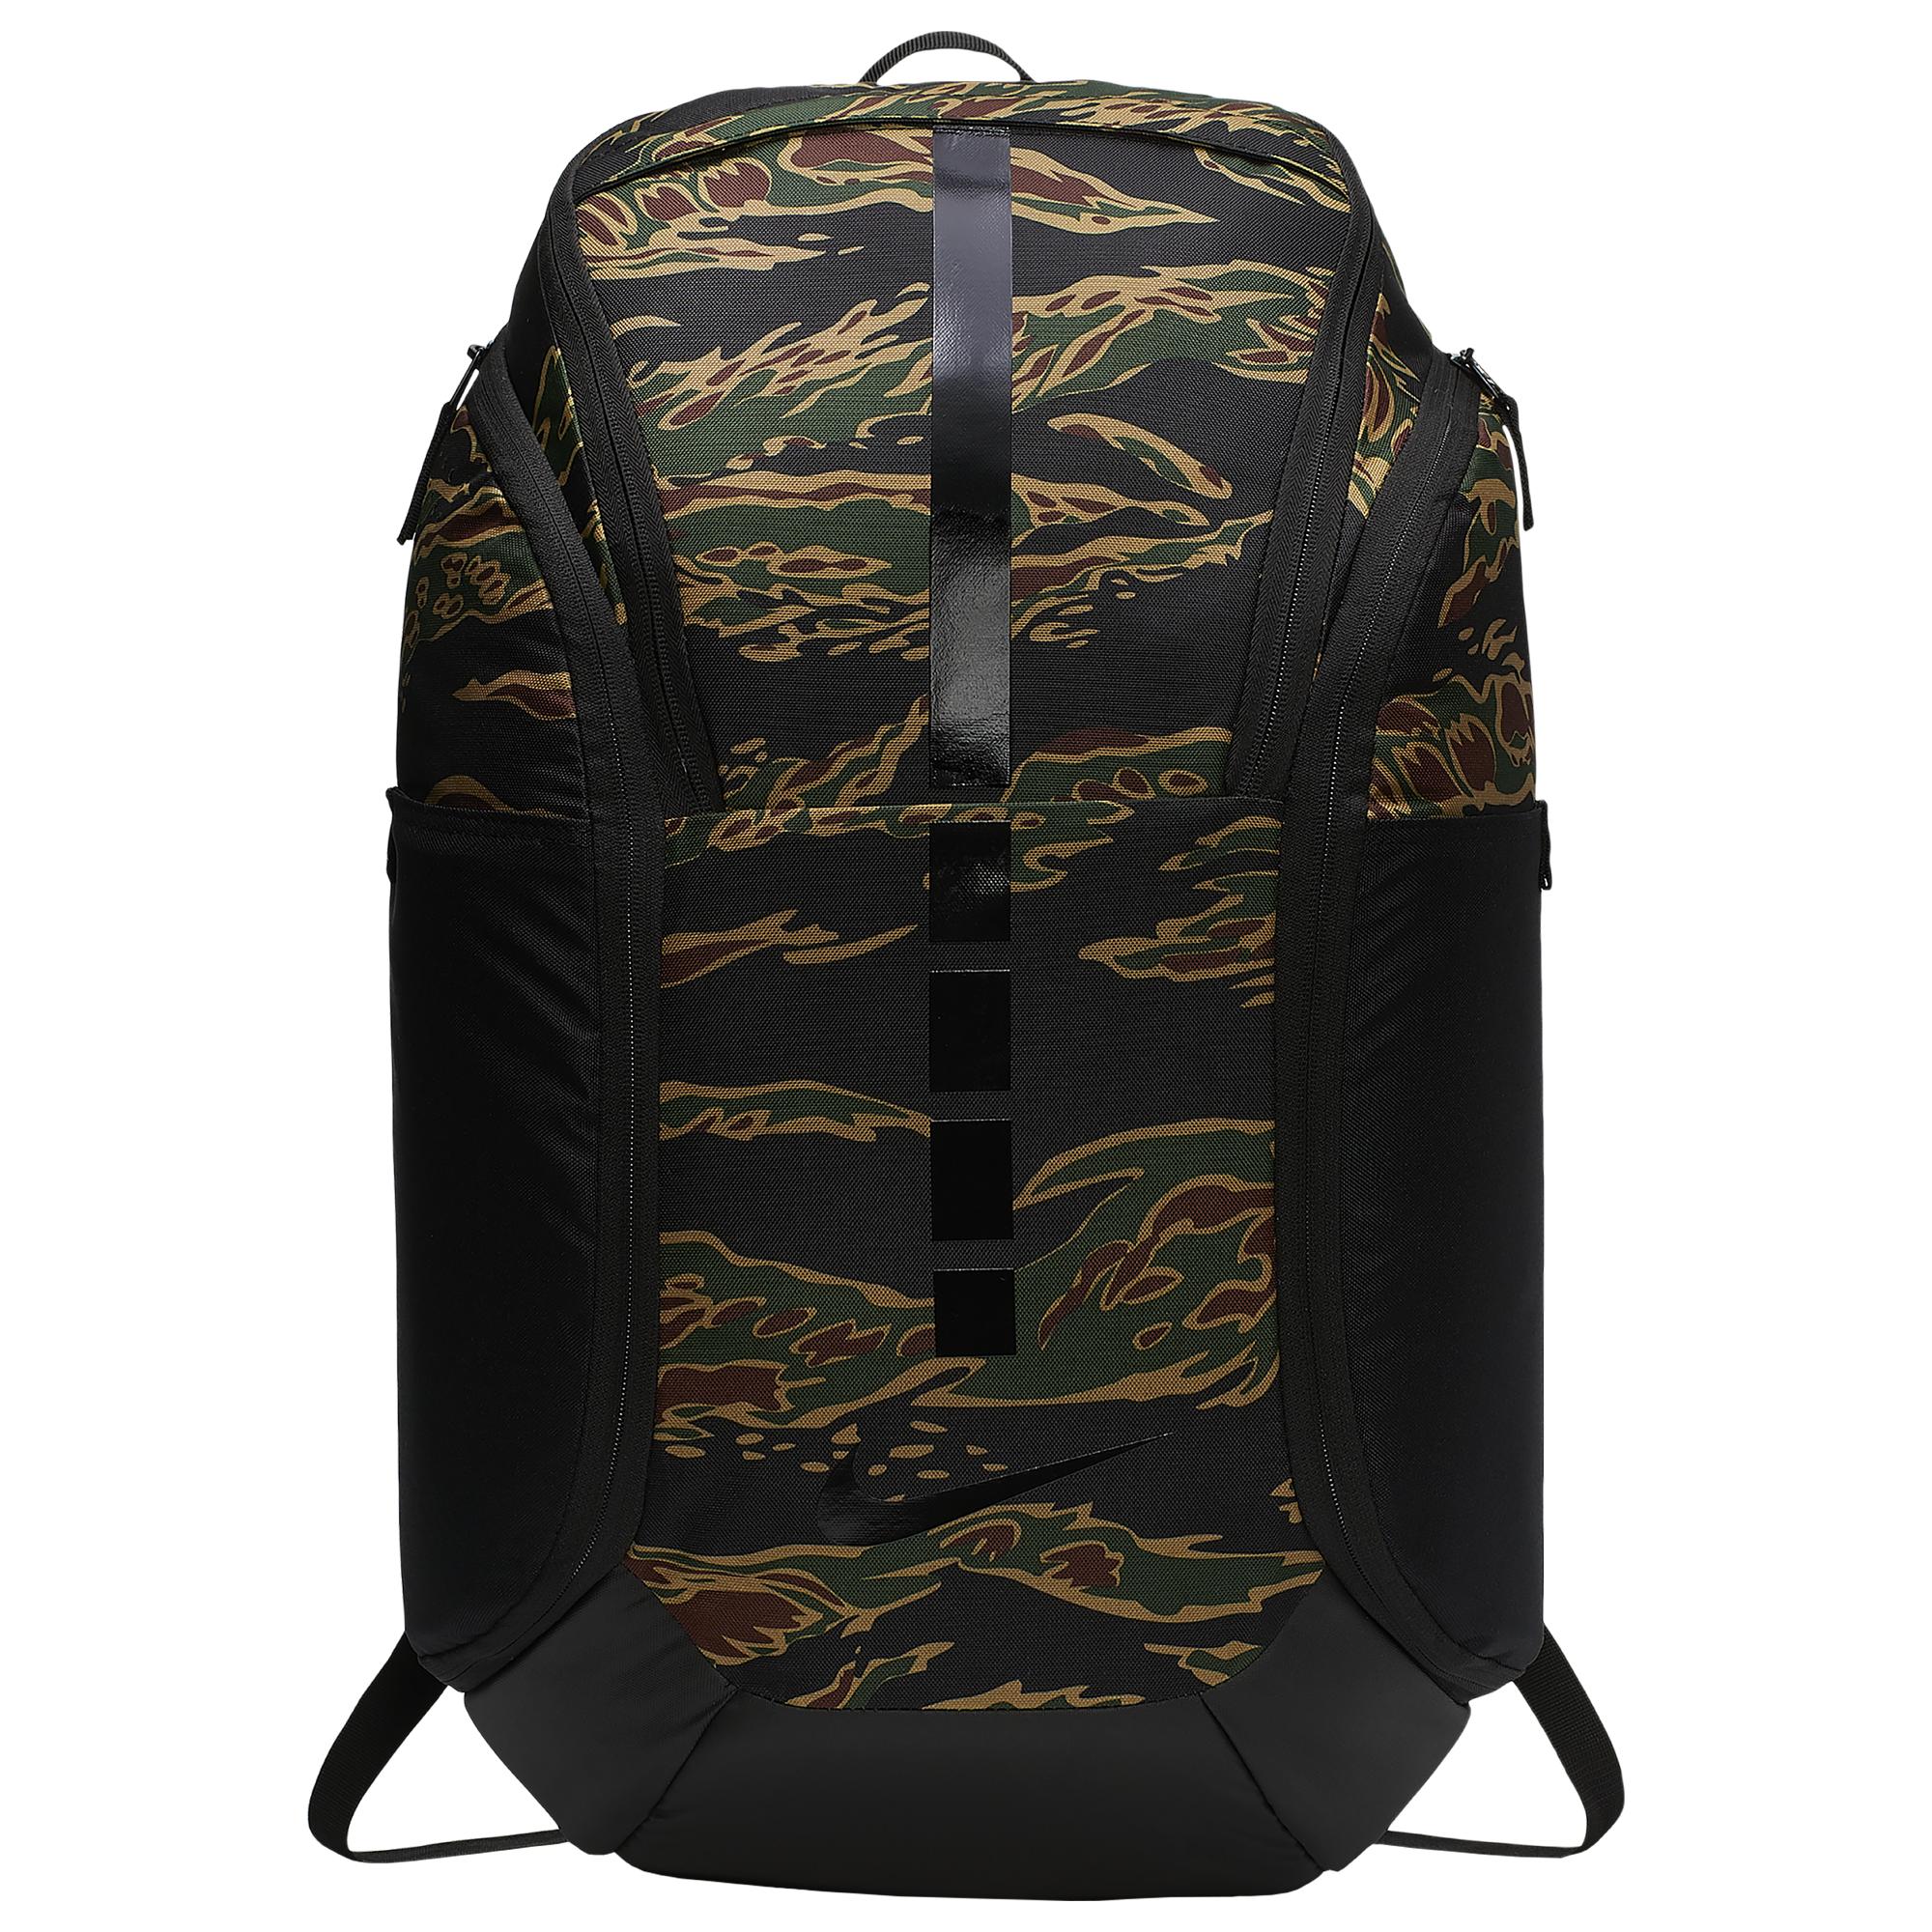 eastbay nike elite backpack